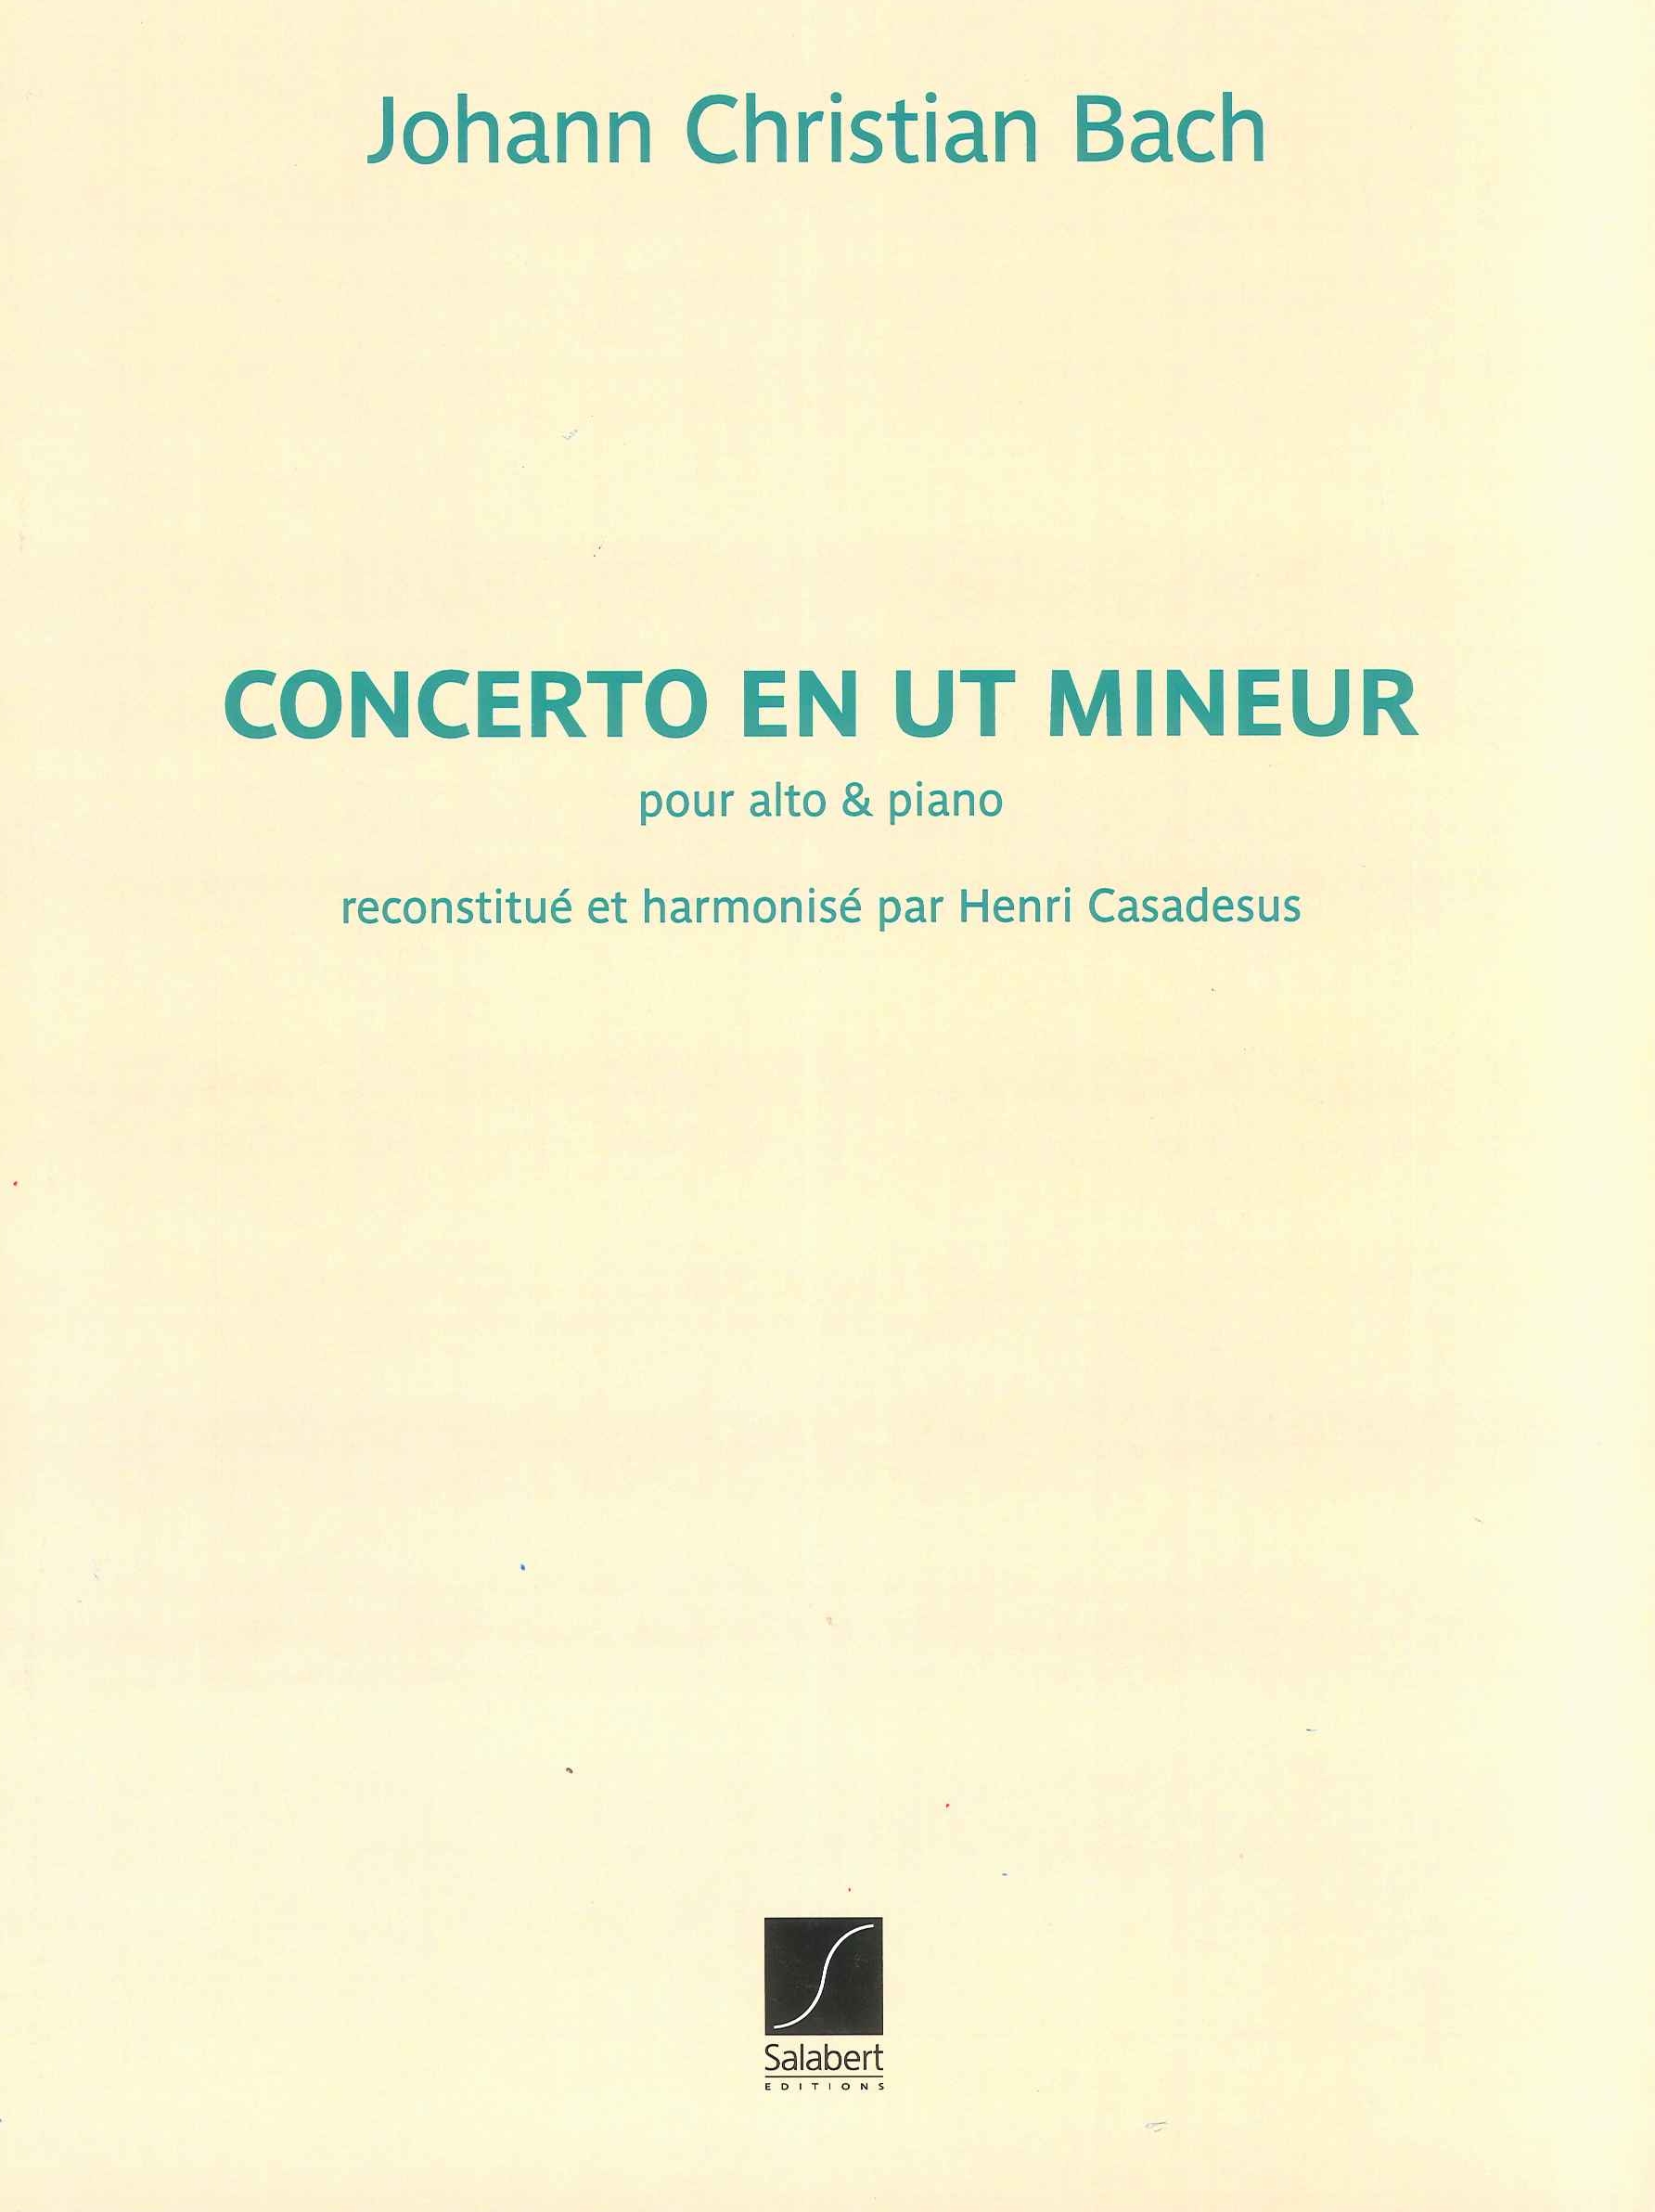 Bach Jc Concerto Cmin Casadesus Viola & Pf Sheet Music Songbook